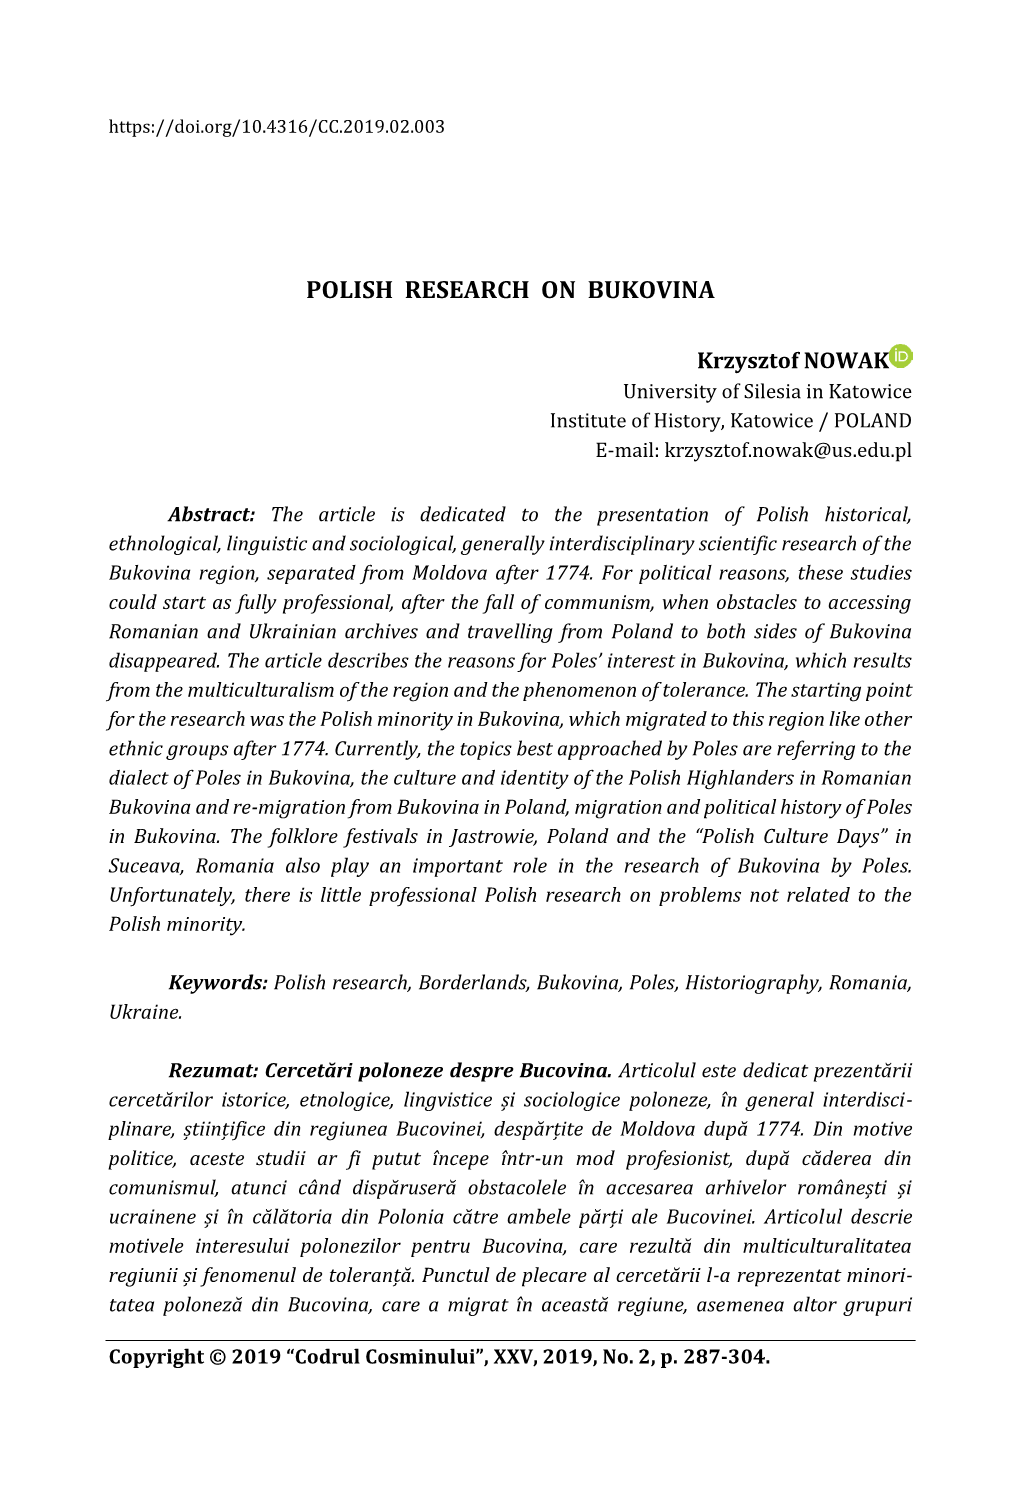 Polish Research on Bukovina